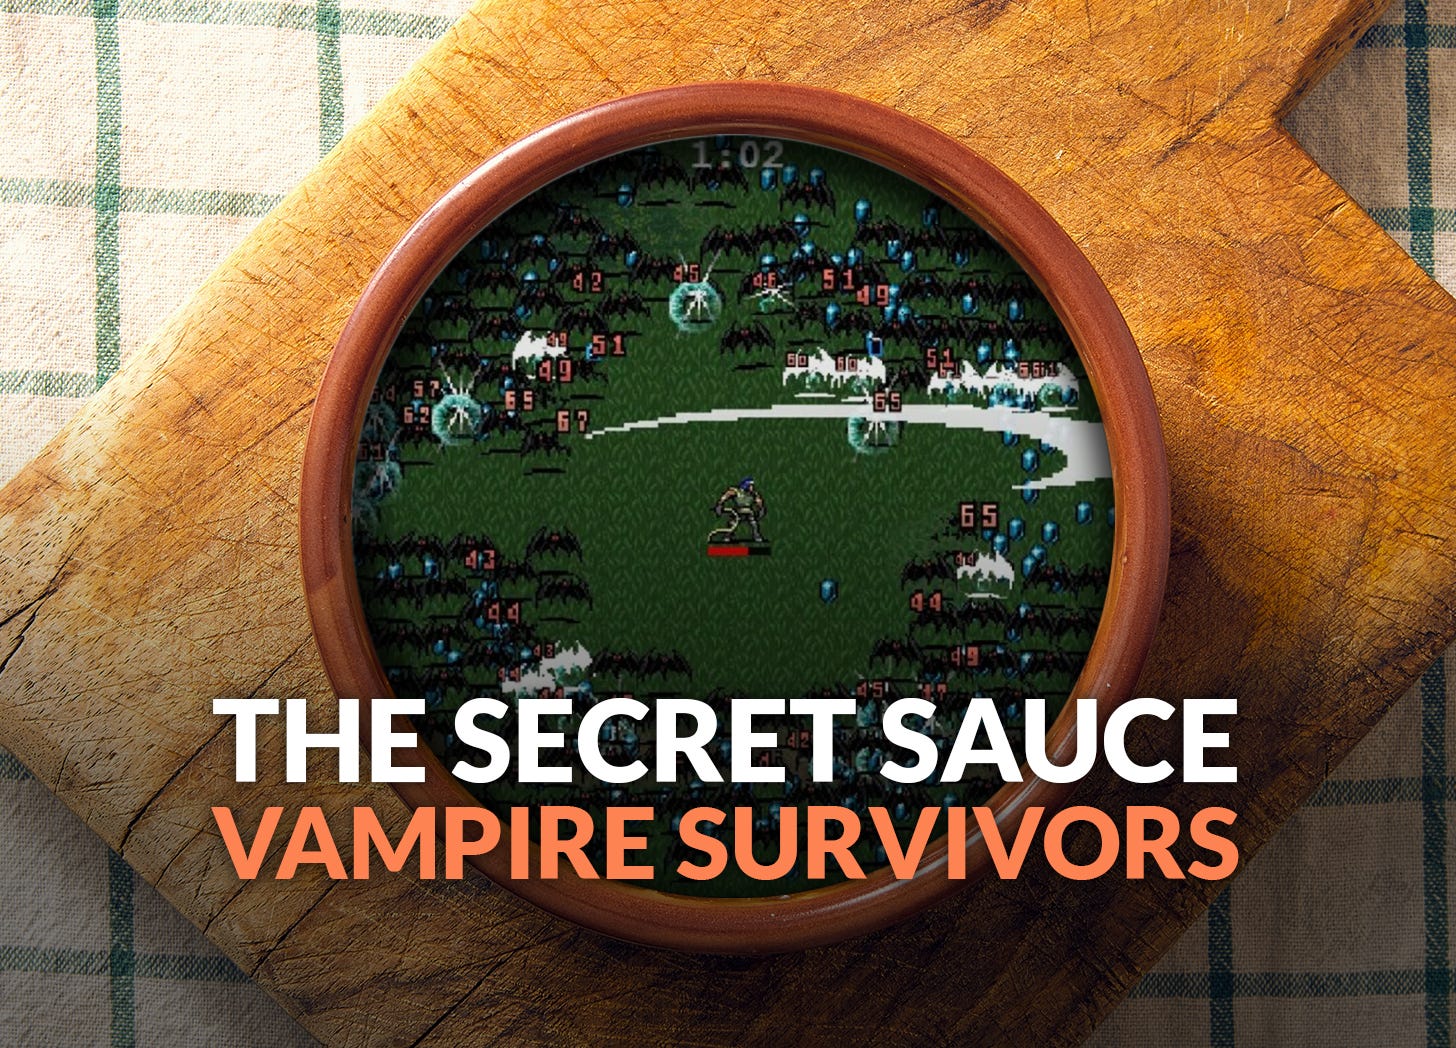 The secret to success in Vampire Survivors is power evolution